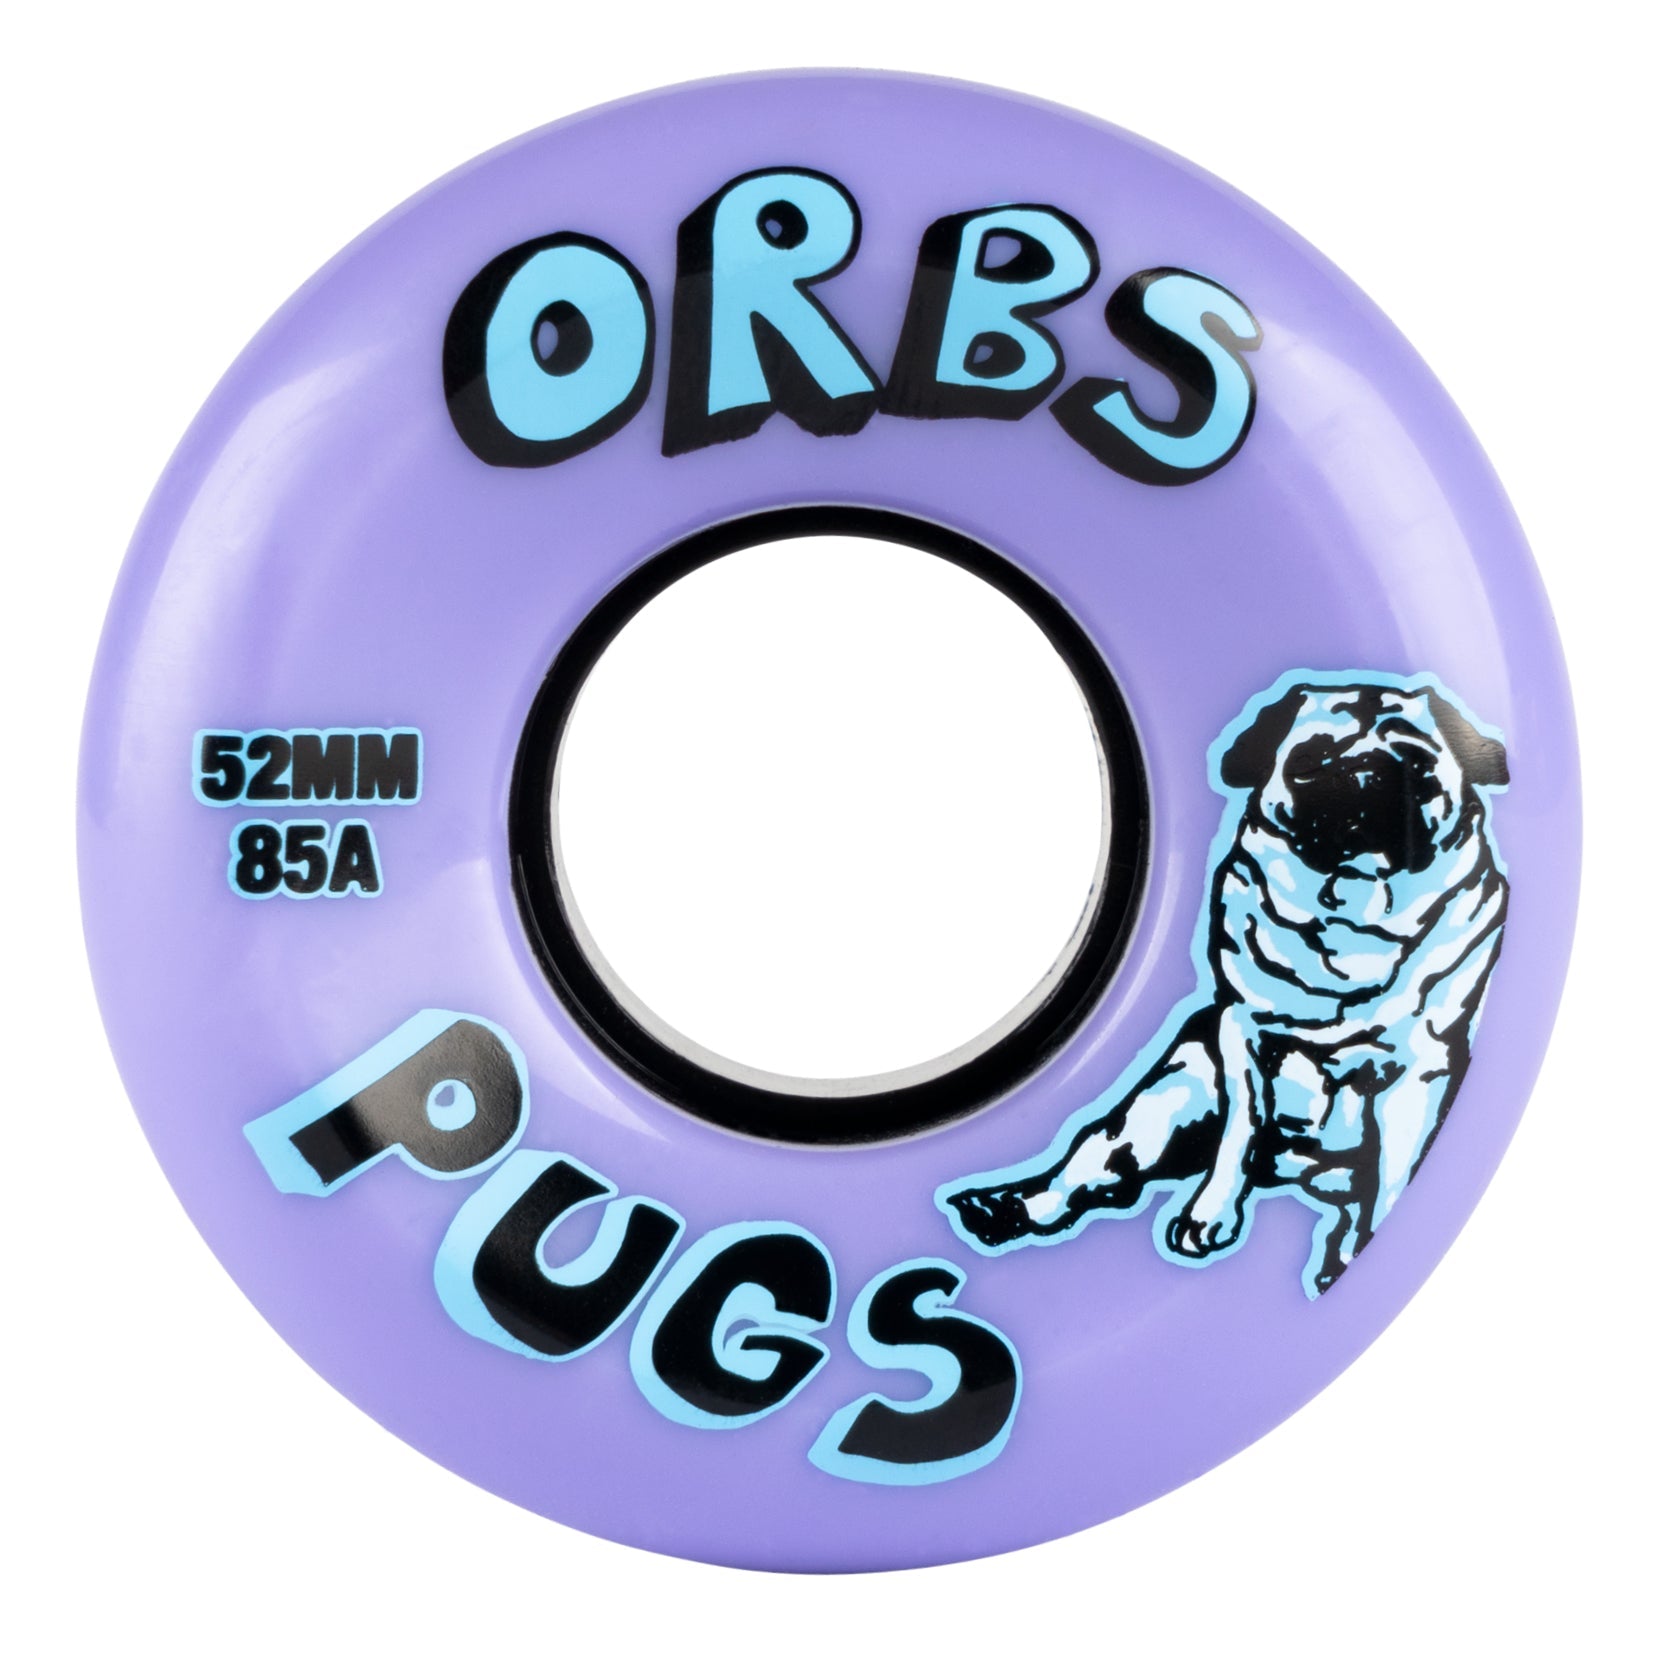 ORBS WHEELS - PUGS 85A LAVENDER (52MM)